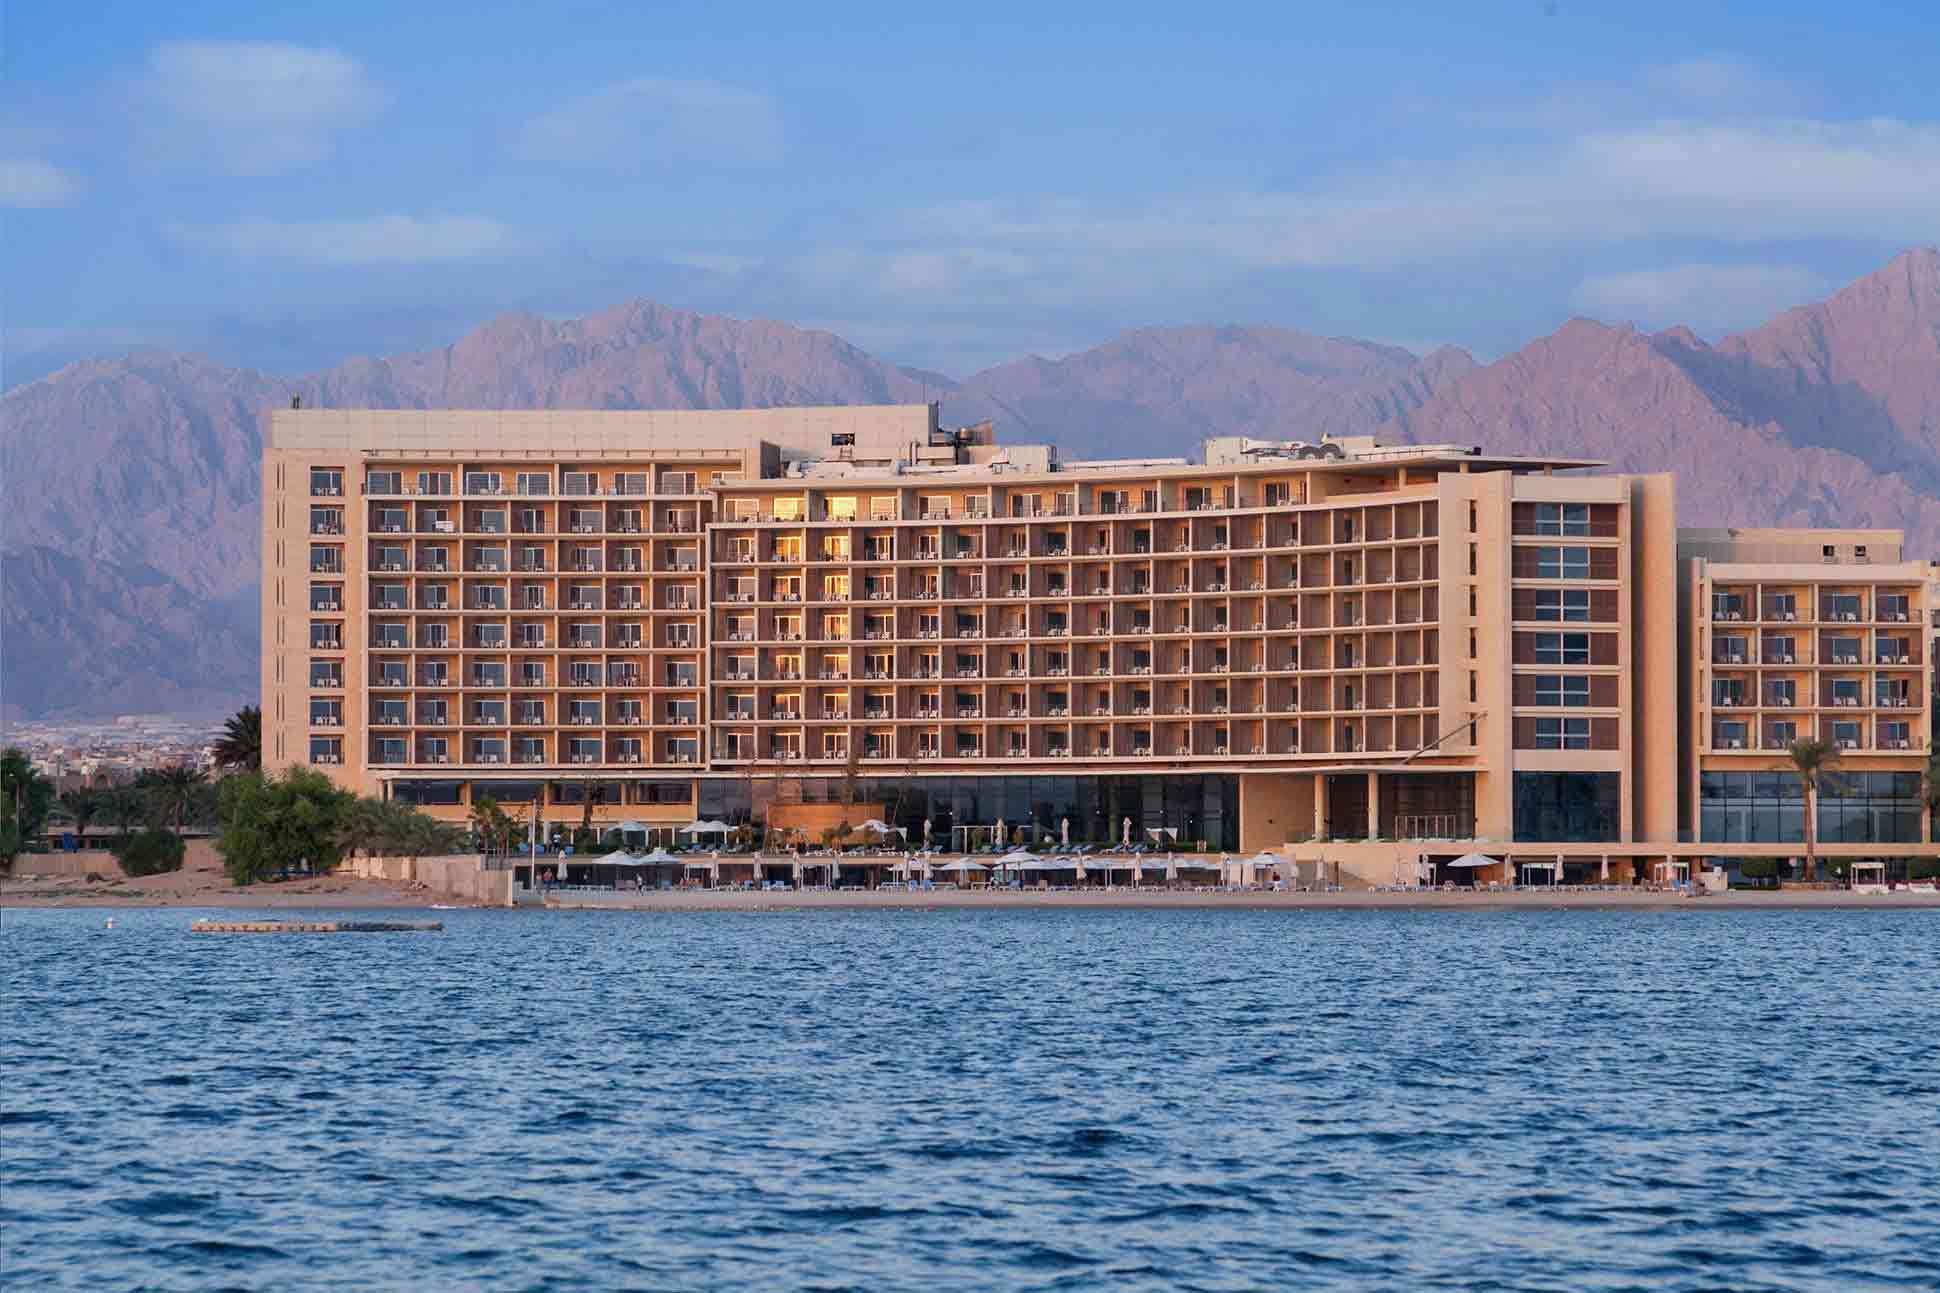 Kempinski Hotel Aqaba Red Sea, Aqaba, Jordan